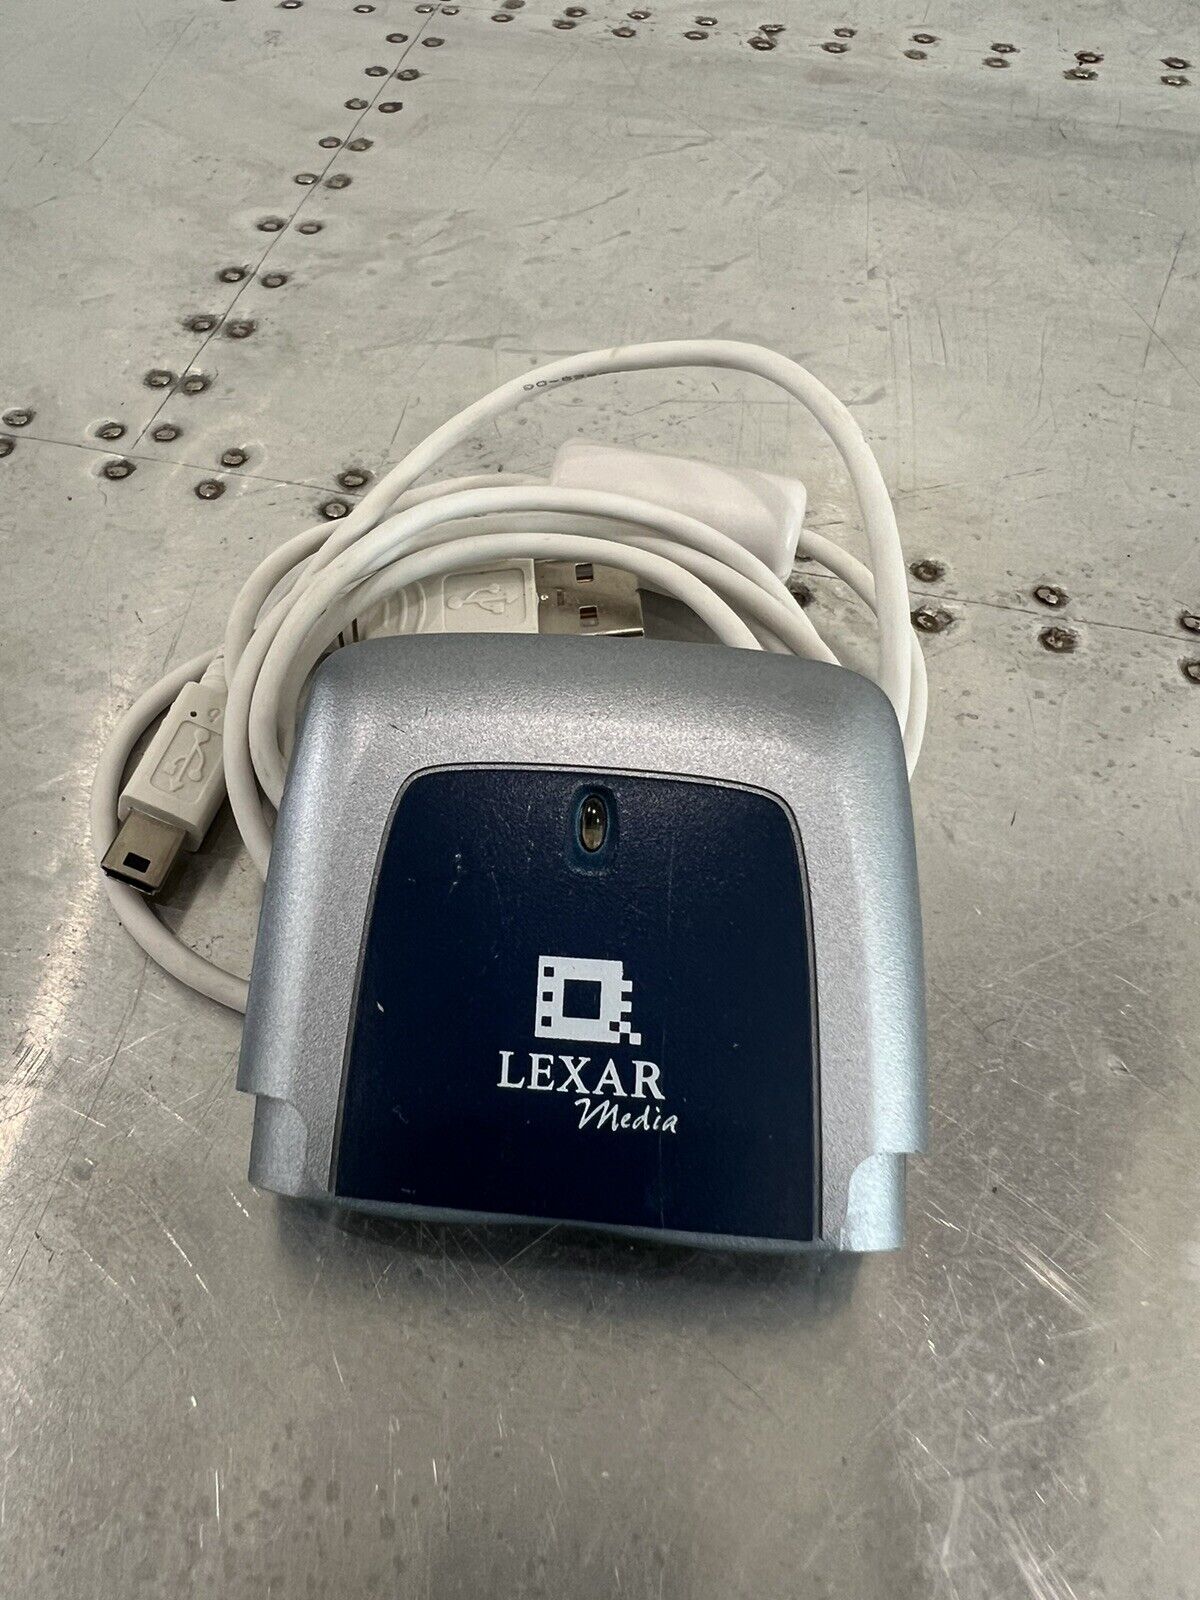 Lexar Media USB 2.0 Multi-Card Reader Compact Flash, SD Card, Smart Media